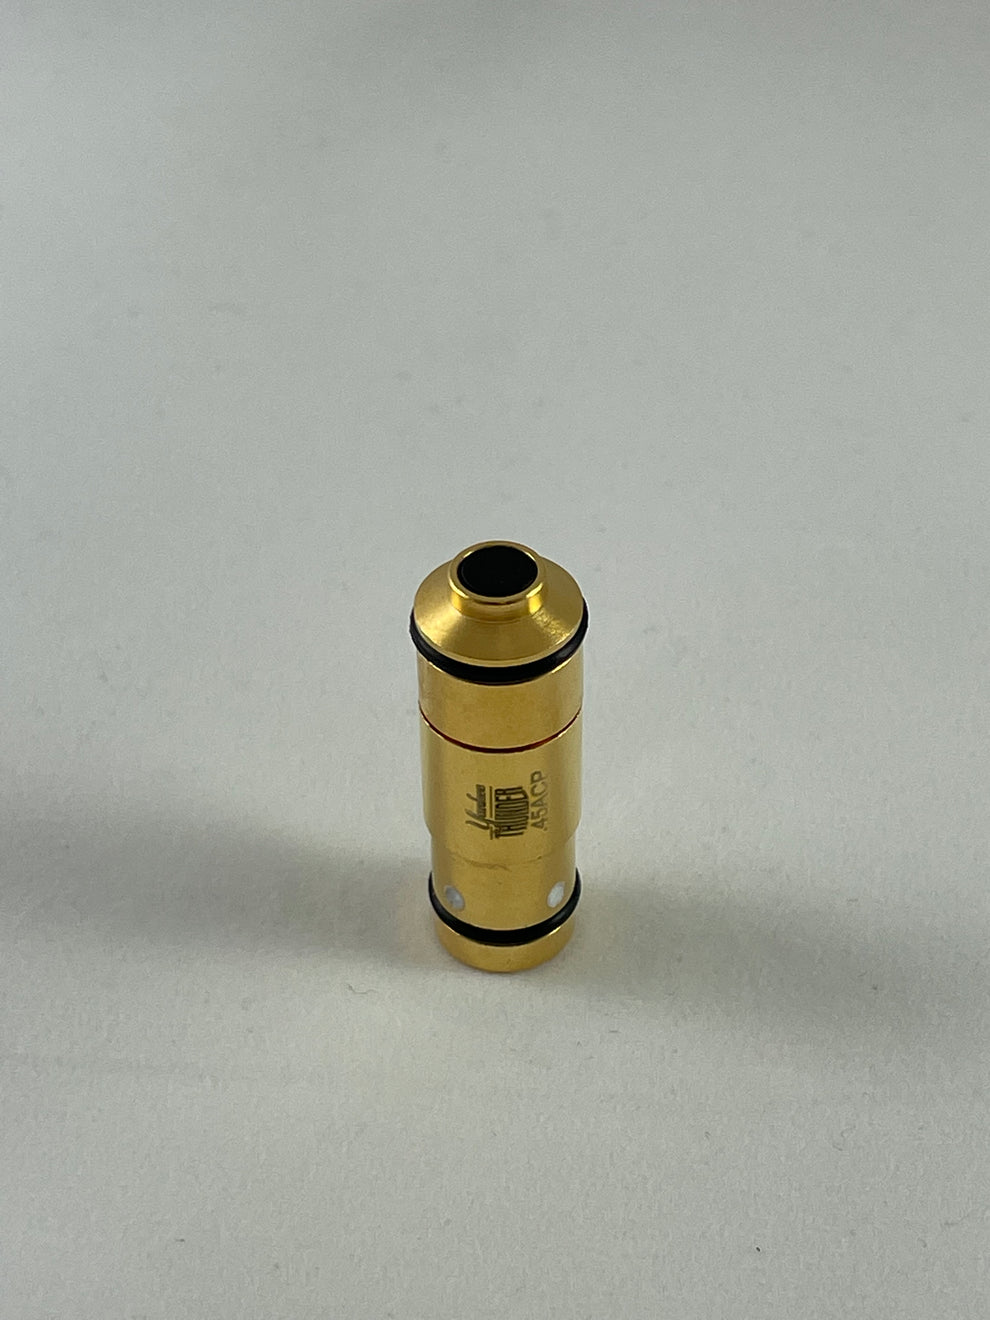 .45 Caliber Laser Cartridge - Vertical View